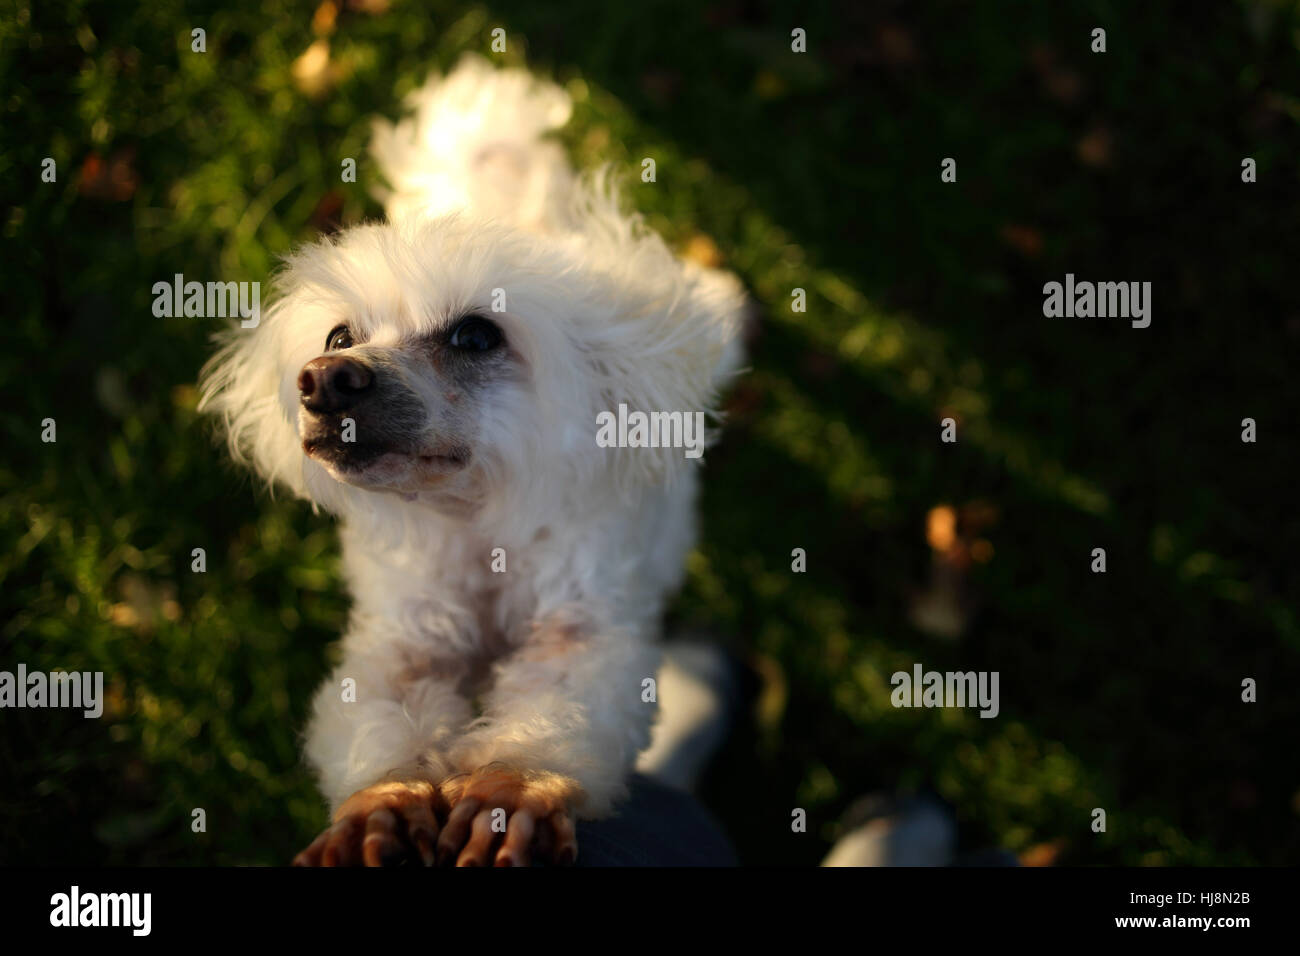 Bichon Frise dog rearing up begging Stock Photo